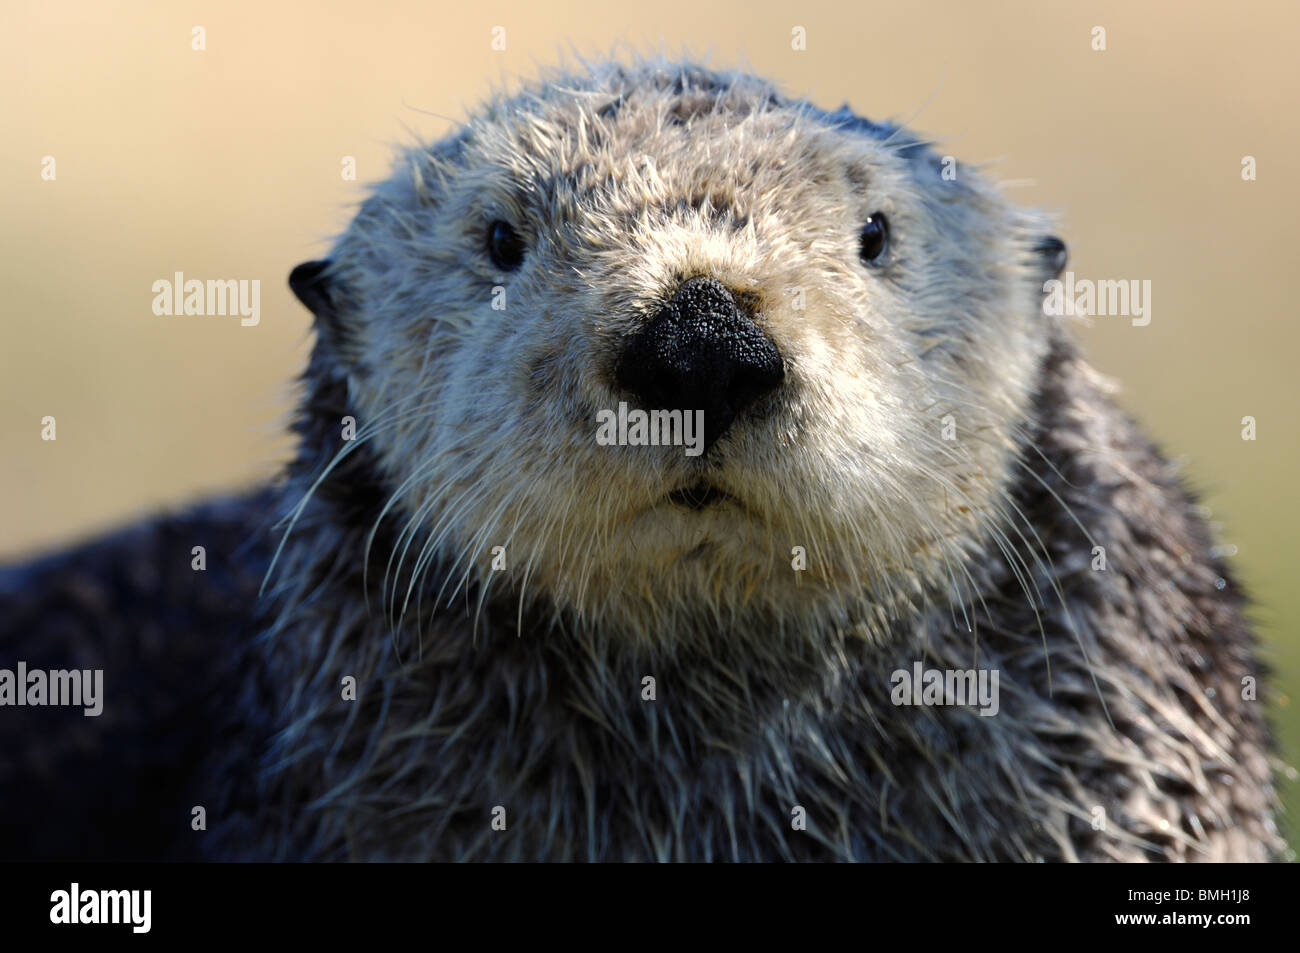 Stock photo of a California sea otter resting on land, Moss Landing, California, May 2010. Stock Photo